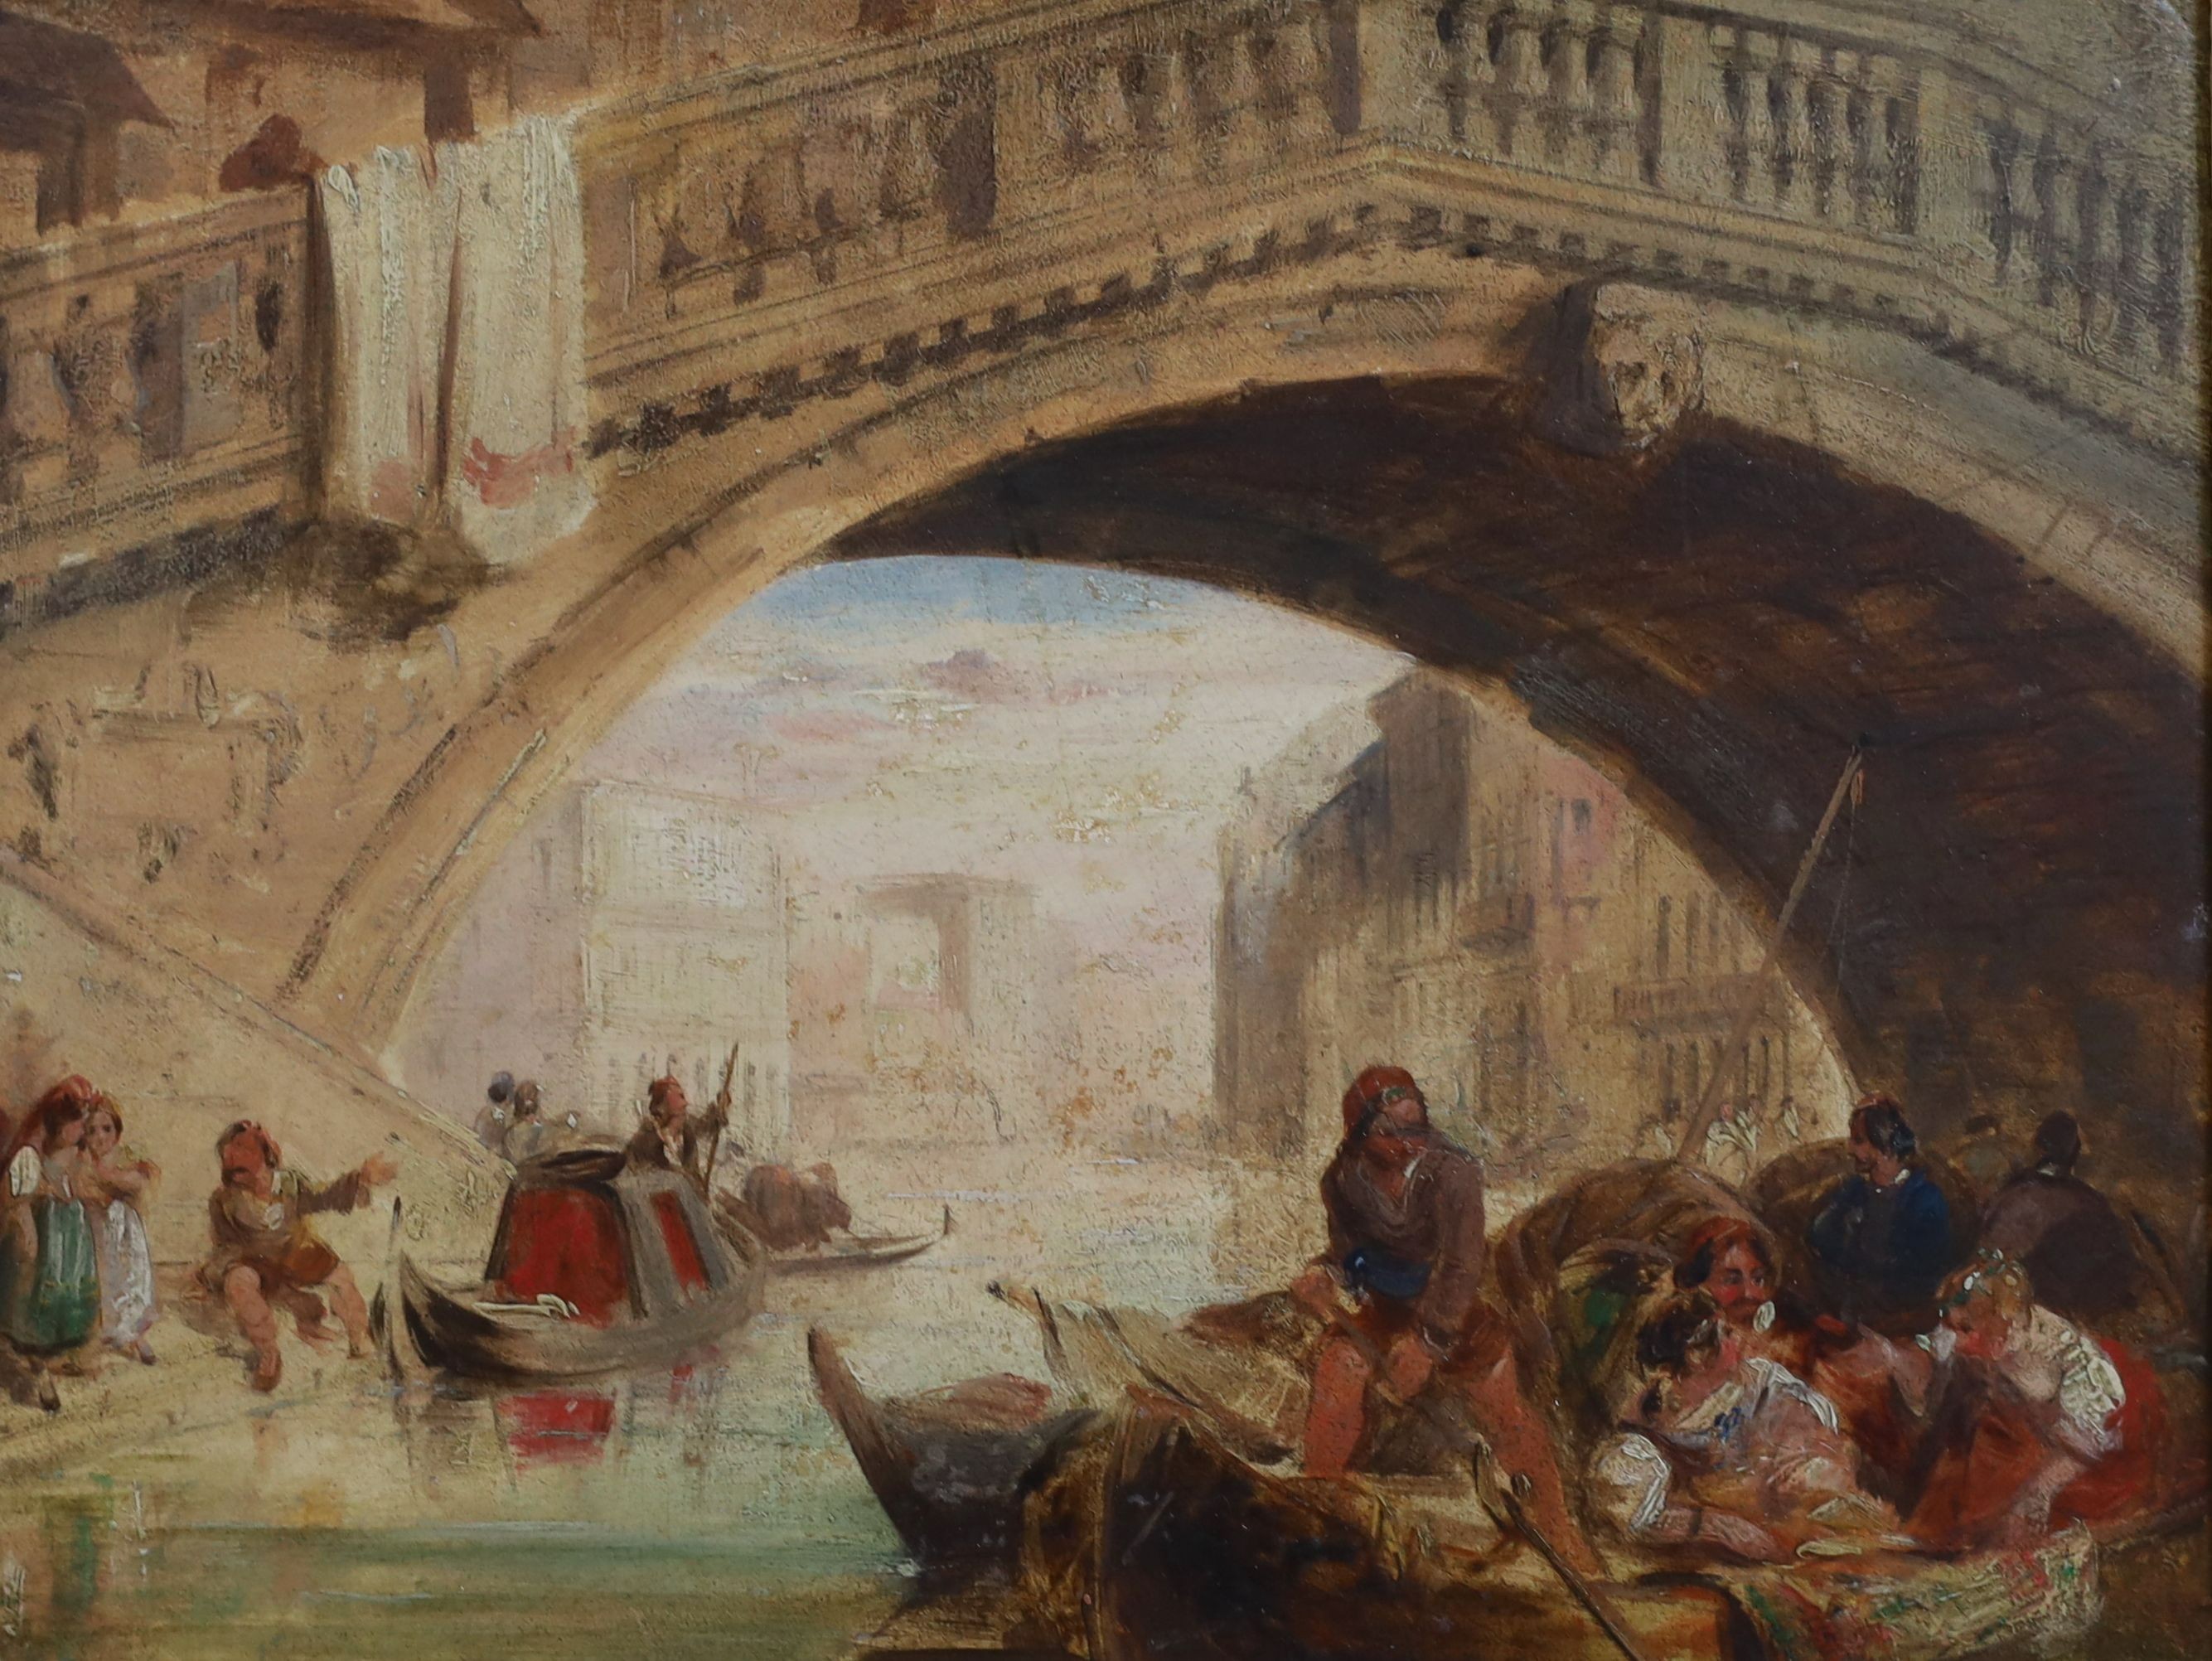 Edward Pritchett (1828-1864), Gondoliers beneath the Rialto Bridge and View along the Grand Canal, oil on mill board, a pair, 17 x 22cm